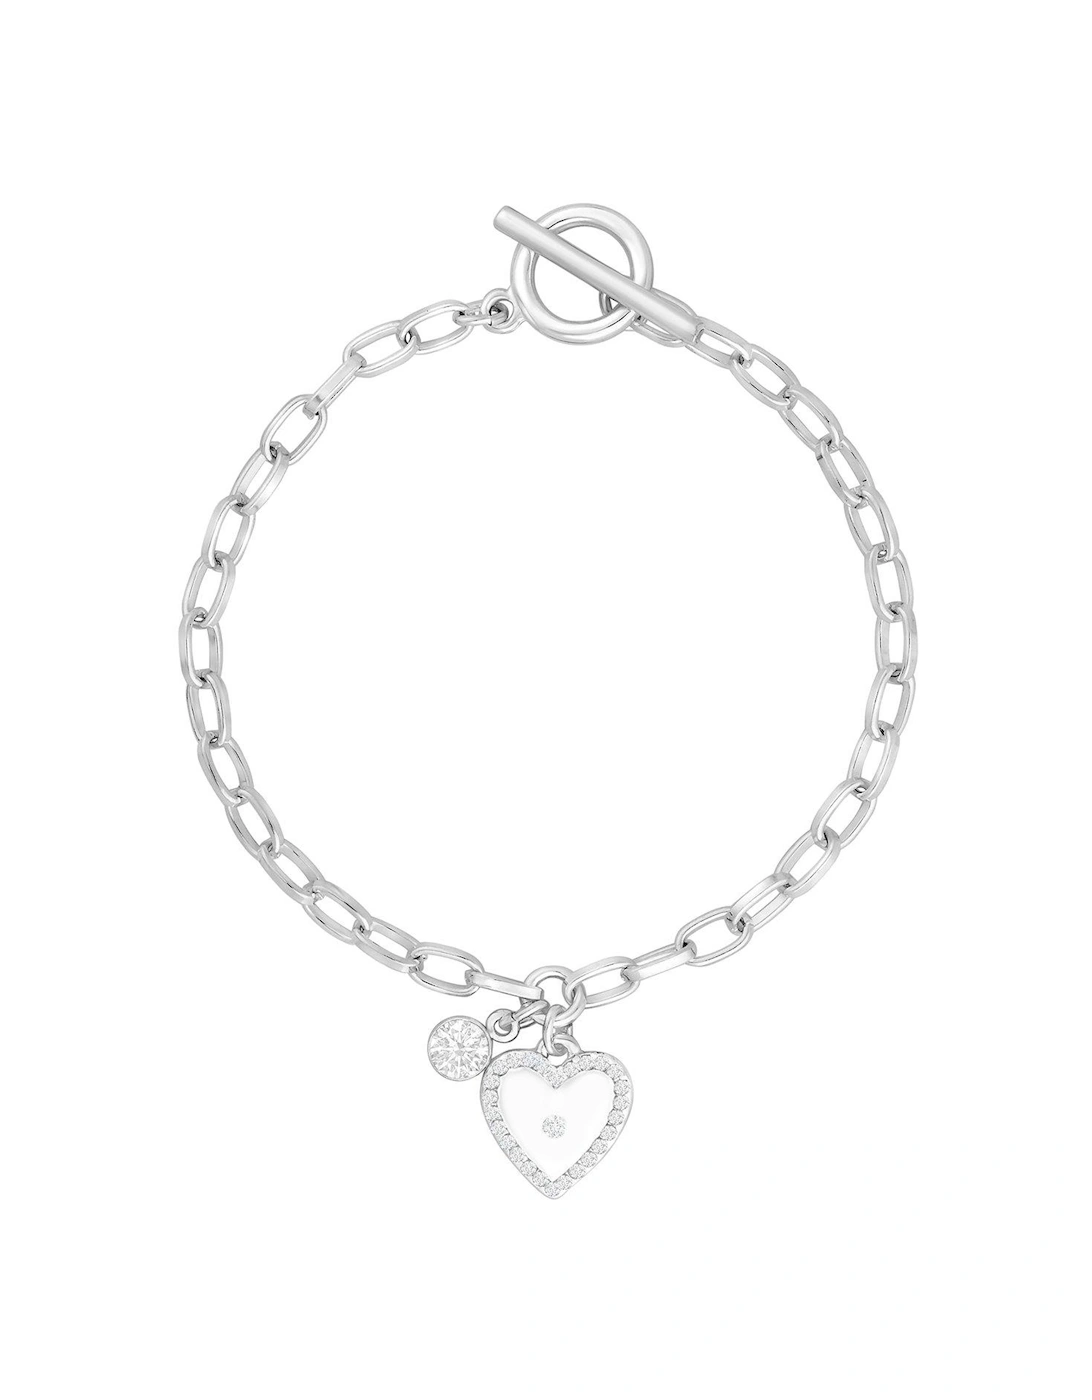 Silver Heart Charm Bracelet - Gift Boxed, 2 of 1